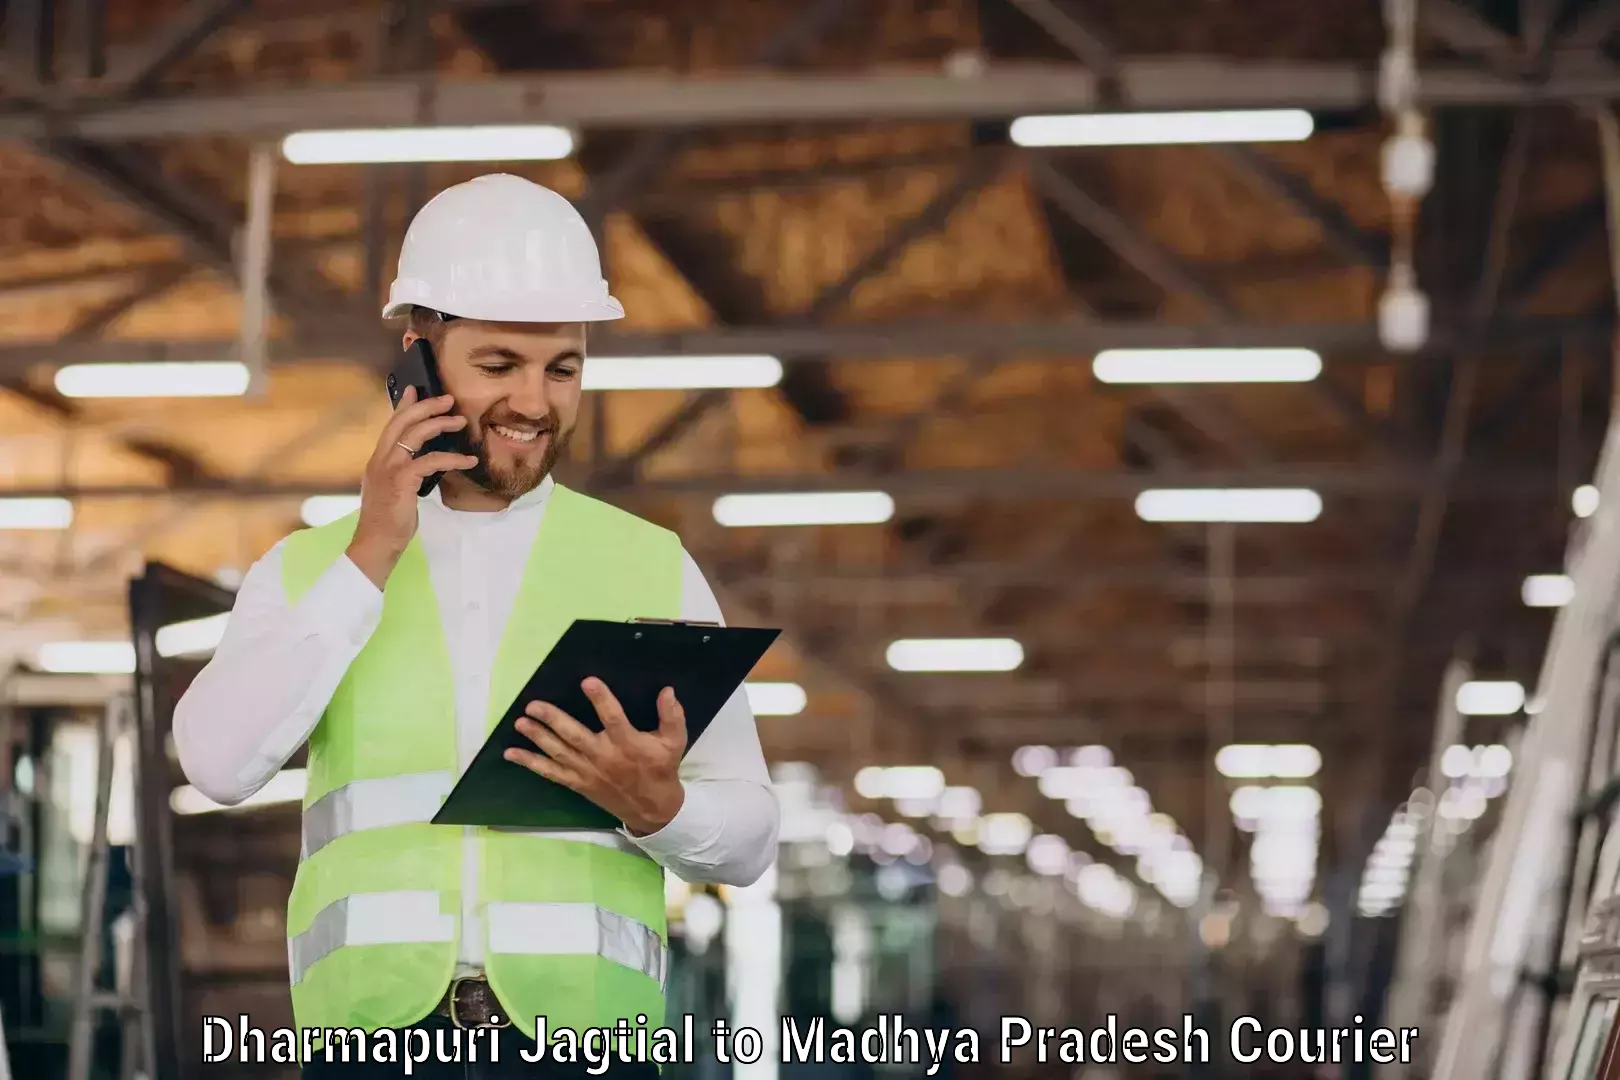 Courier service partnerships Dharmapuri Jagtial to Madhya Pradesh